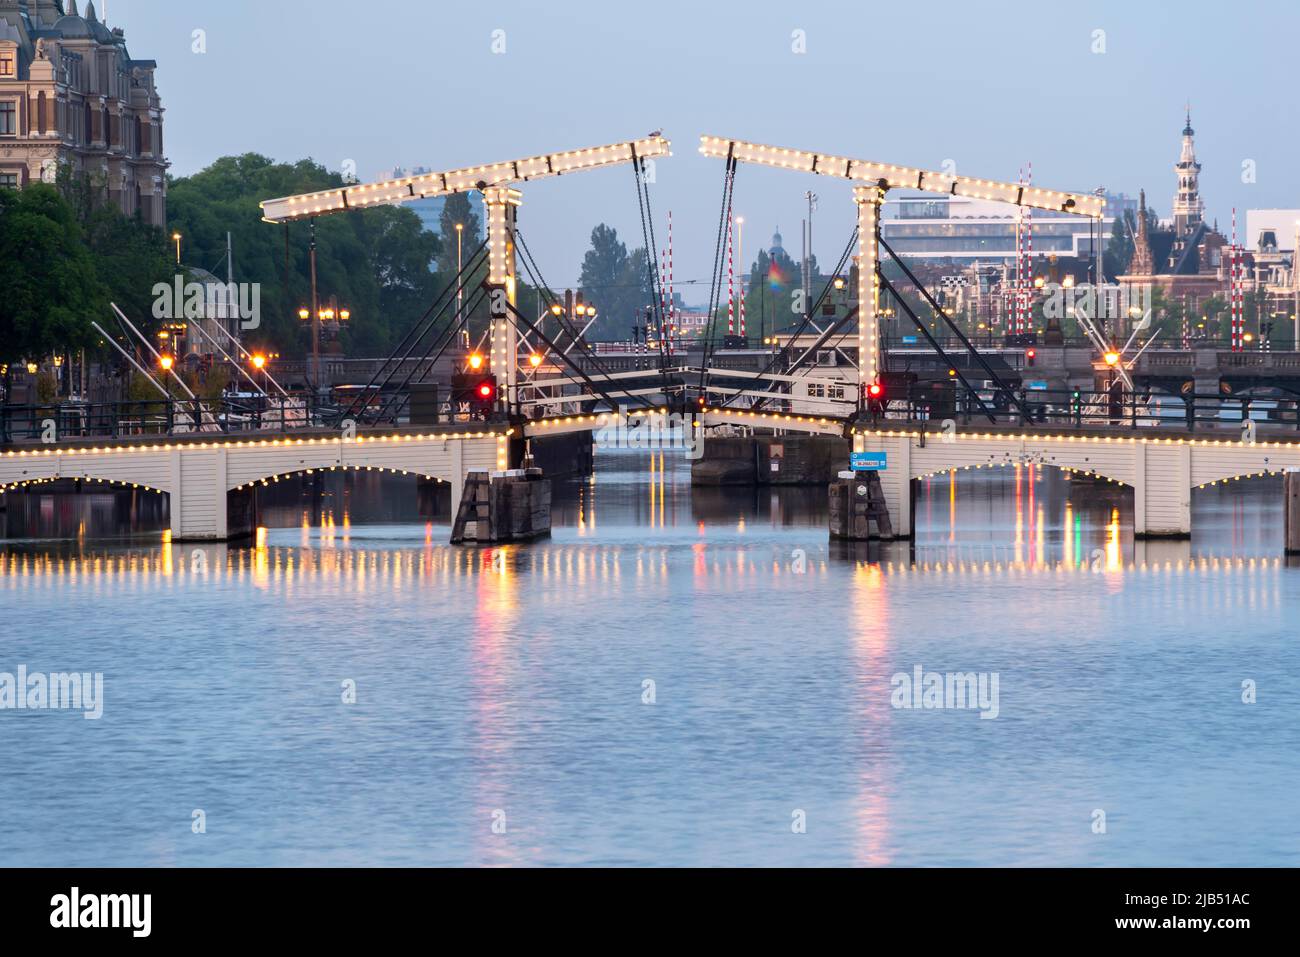 Magere Brug, illuminated Dutchman's Bridge, Kerkstraat, River Amstel, Amsterdam, Netherlands Stock Photo